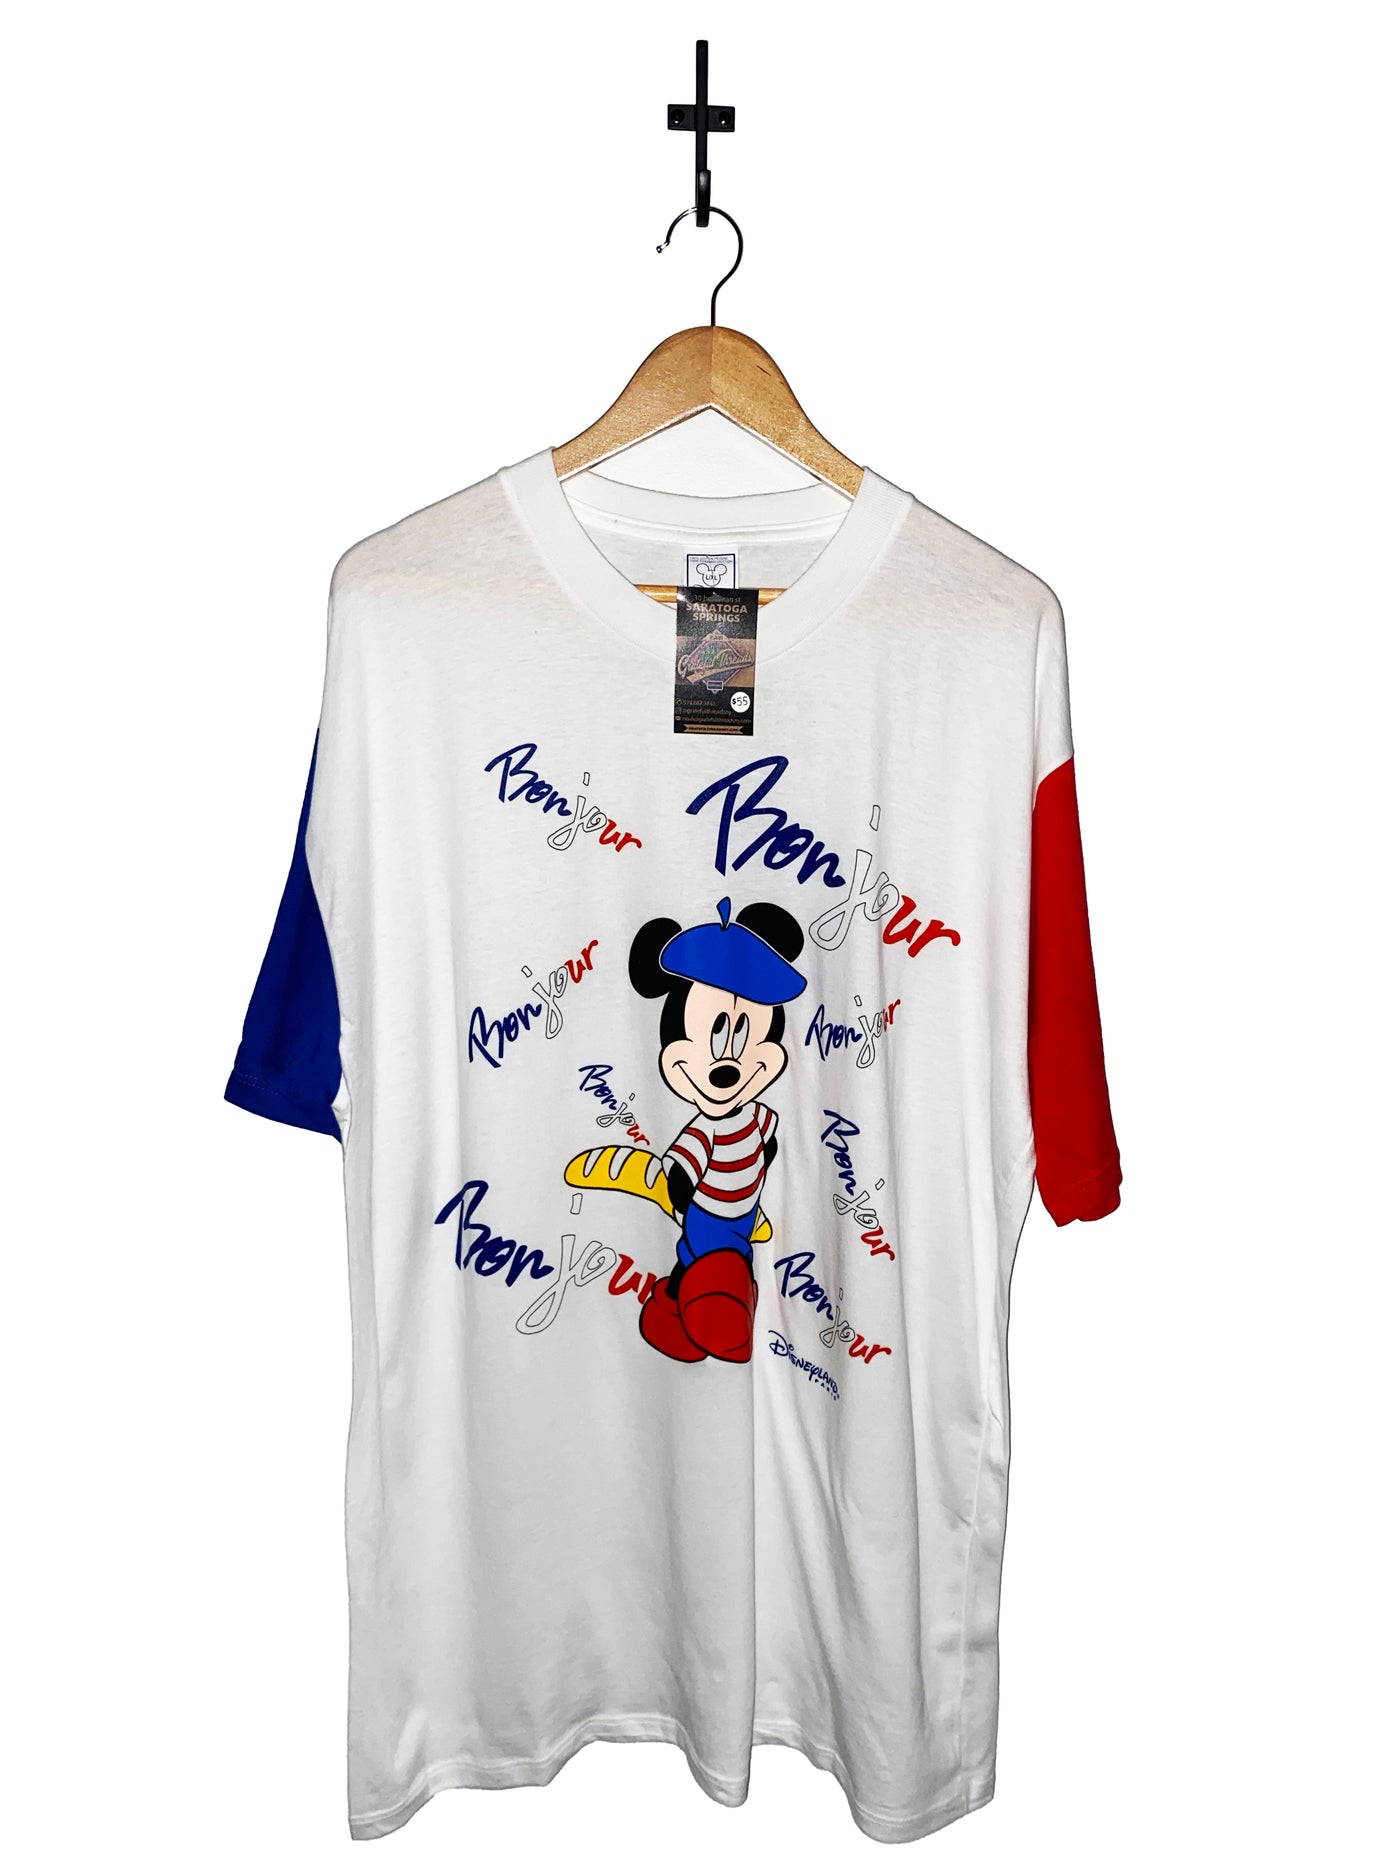 Vintage Disneyland Paris ‘Bonjour’ T-Shirt